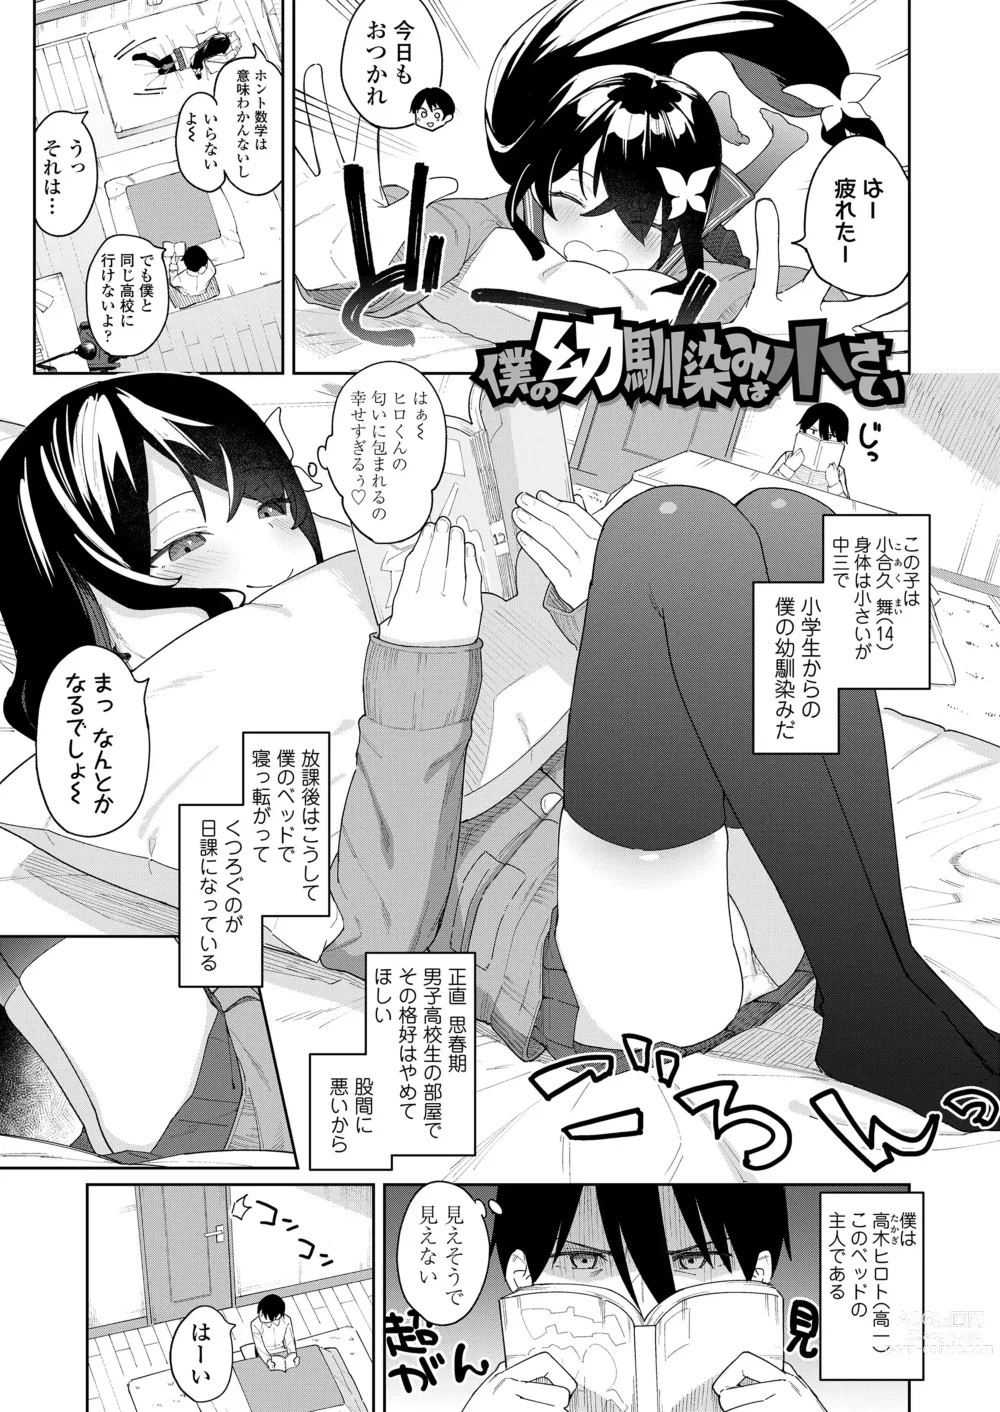 Page 69 of manga Koakuma-tachi ga Yattekita!